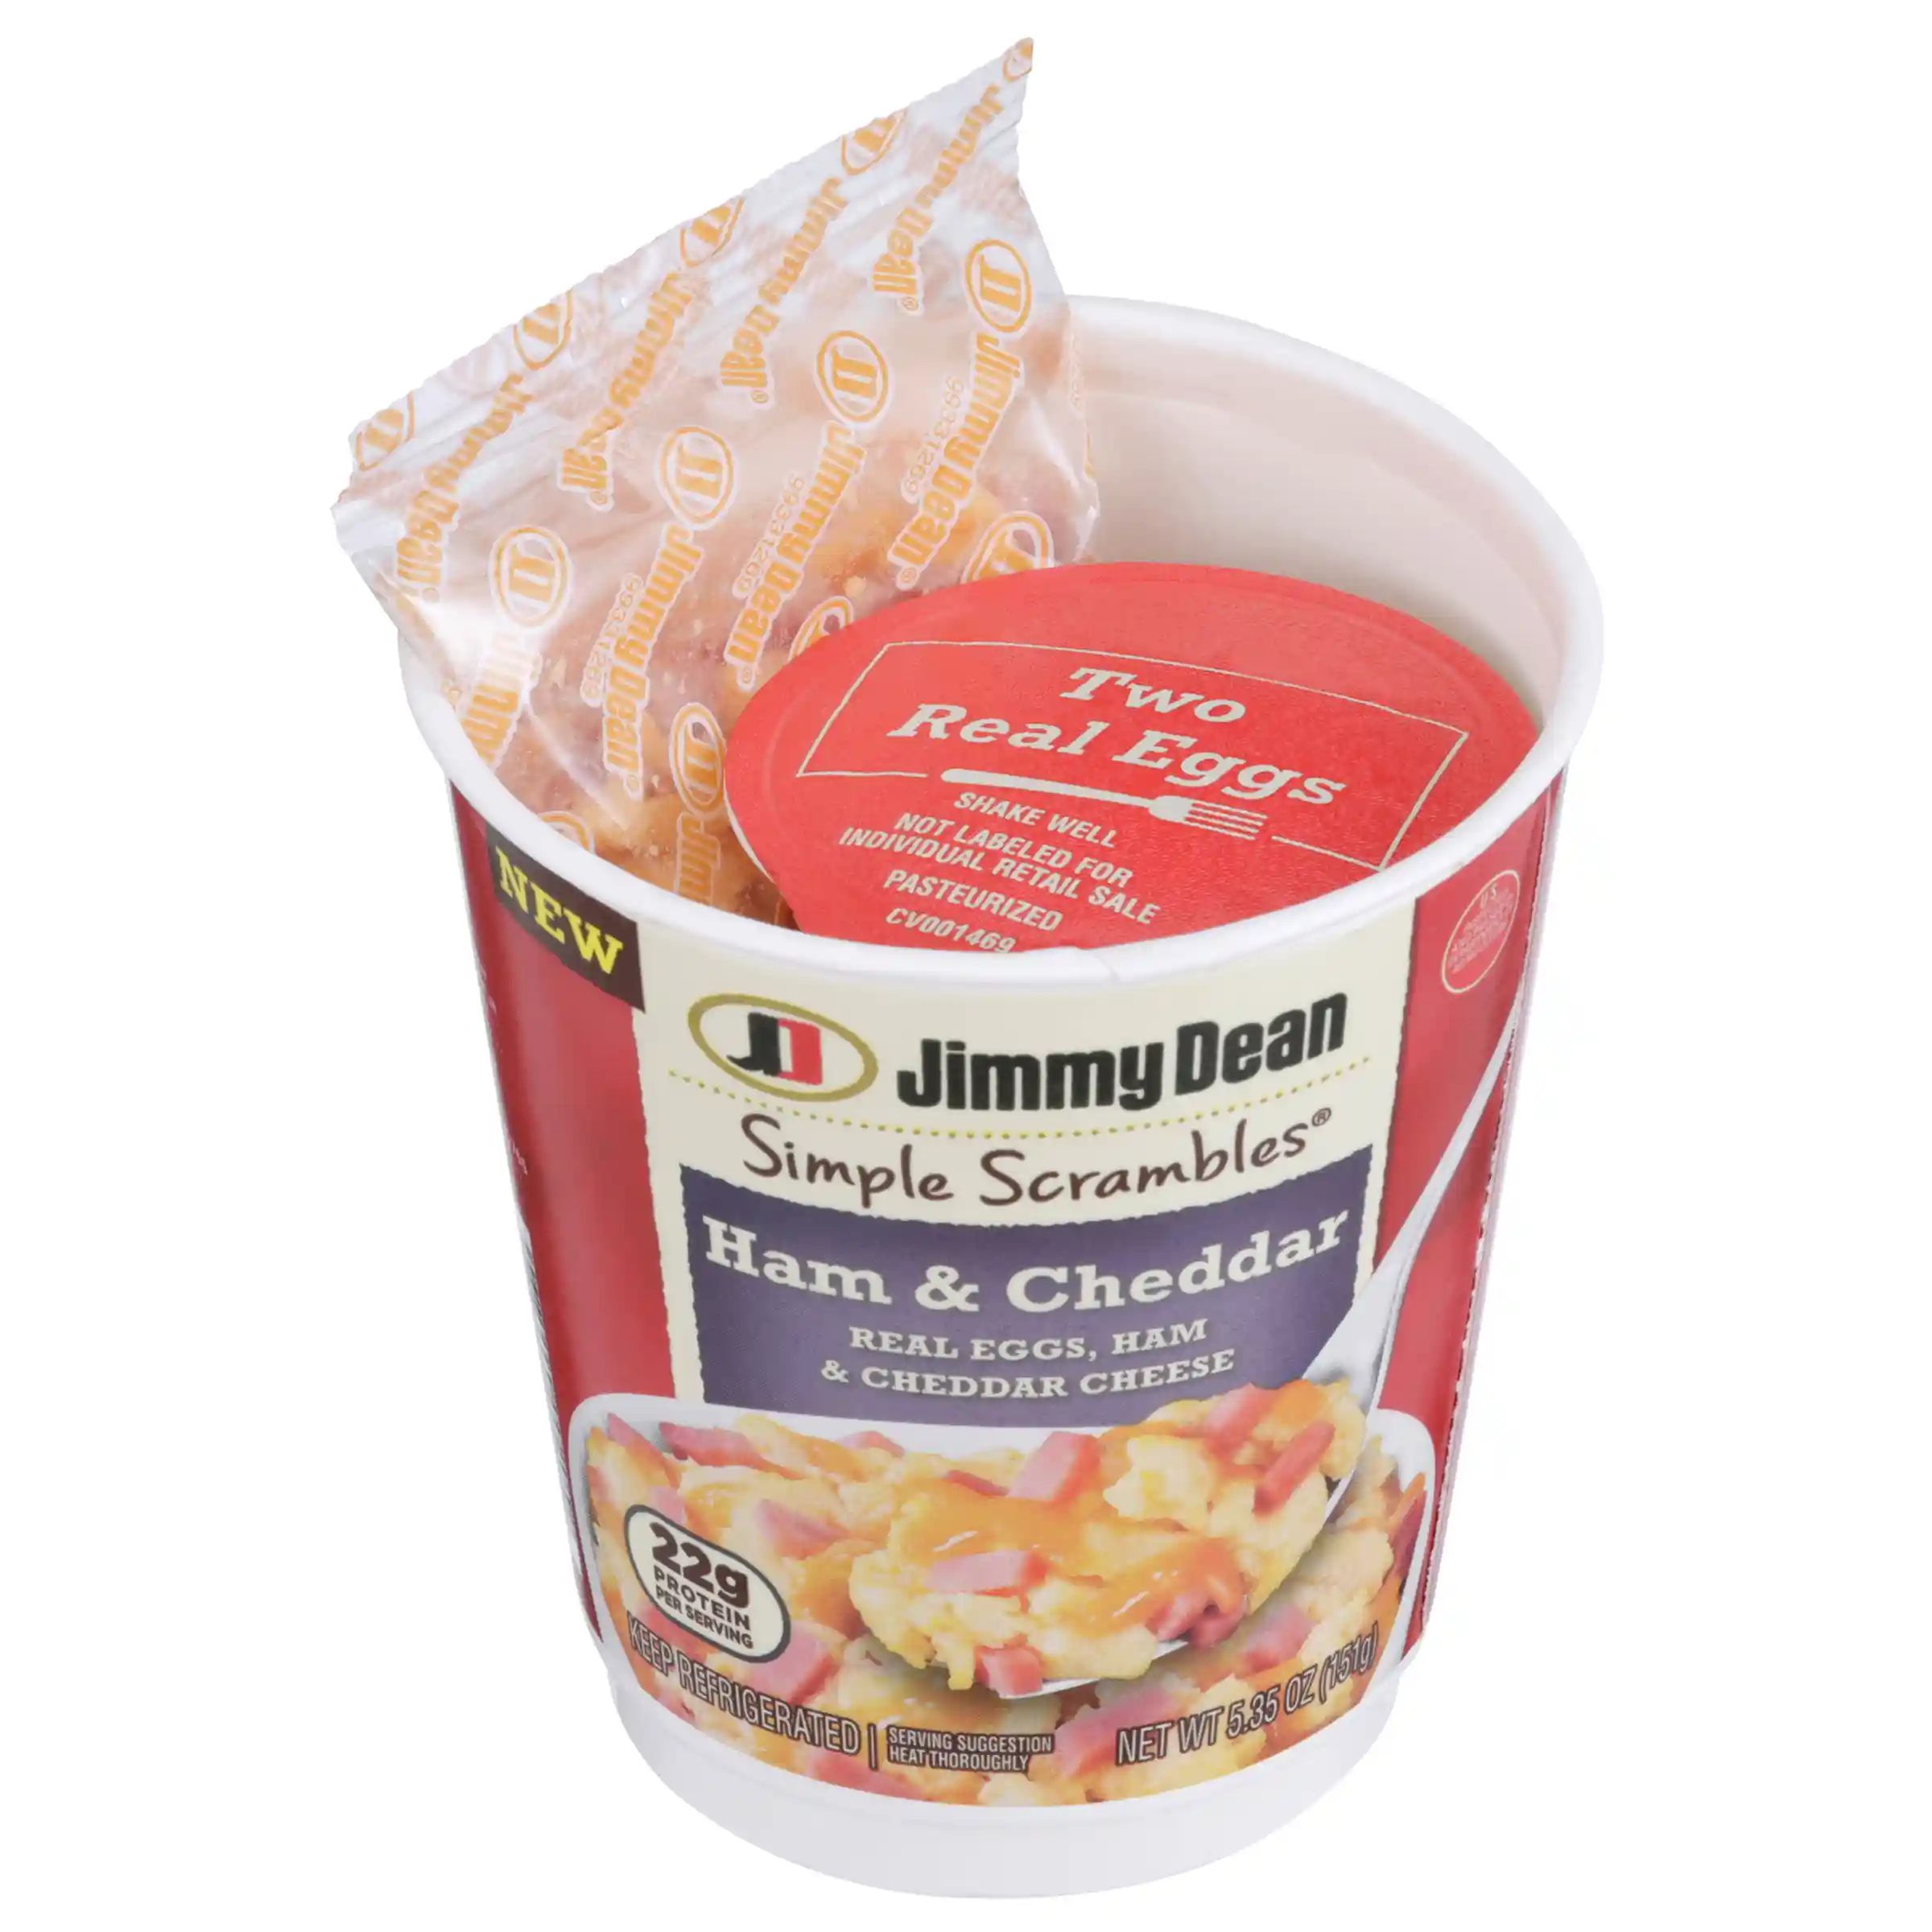 Jimmy Dean Simple Scrambles Ham & Cheddar with Real Eggs, Ham and Cheddar Cheese, 5.35 oz Cuphttps://images.salsify.com/image/upload/s--75sXdmqW--/q_25/dtuva50jzzhsmbgwm2ez.webp